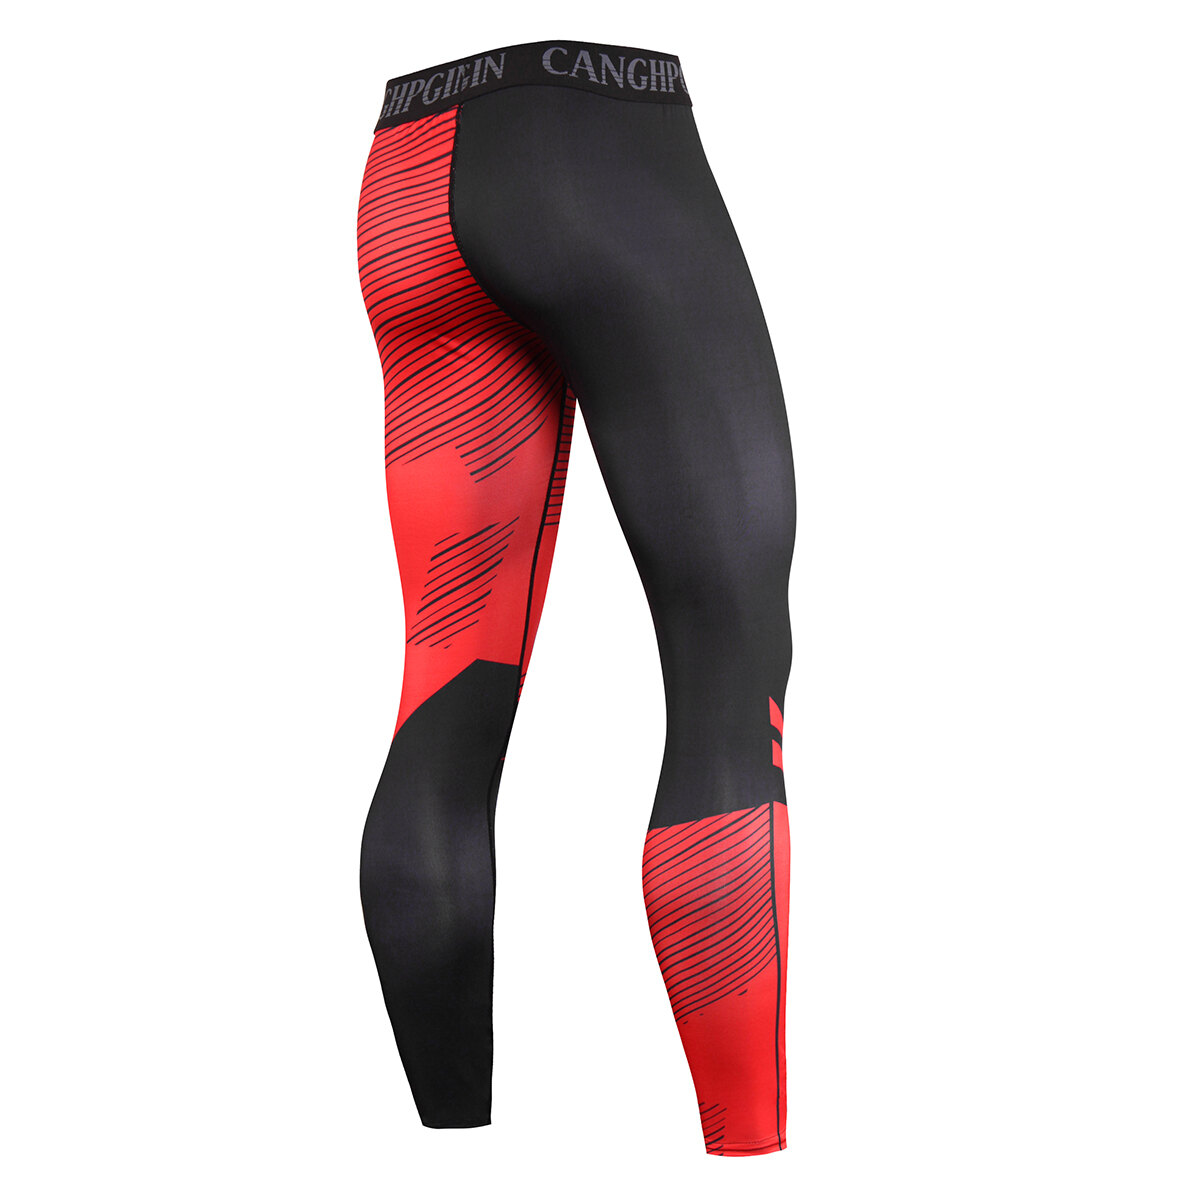 Men's Red And Black Striped Leggings Workout Pants - PKAWAY